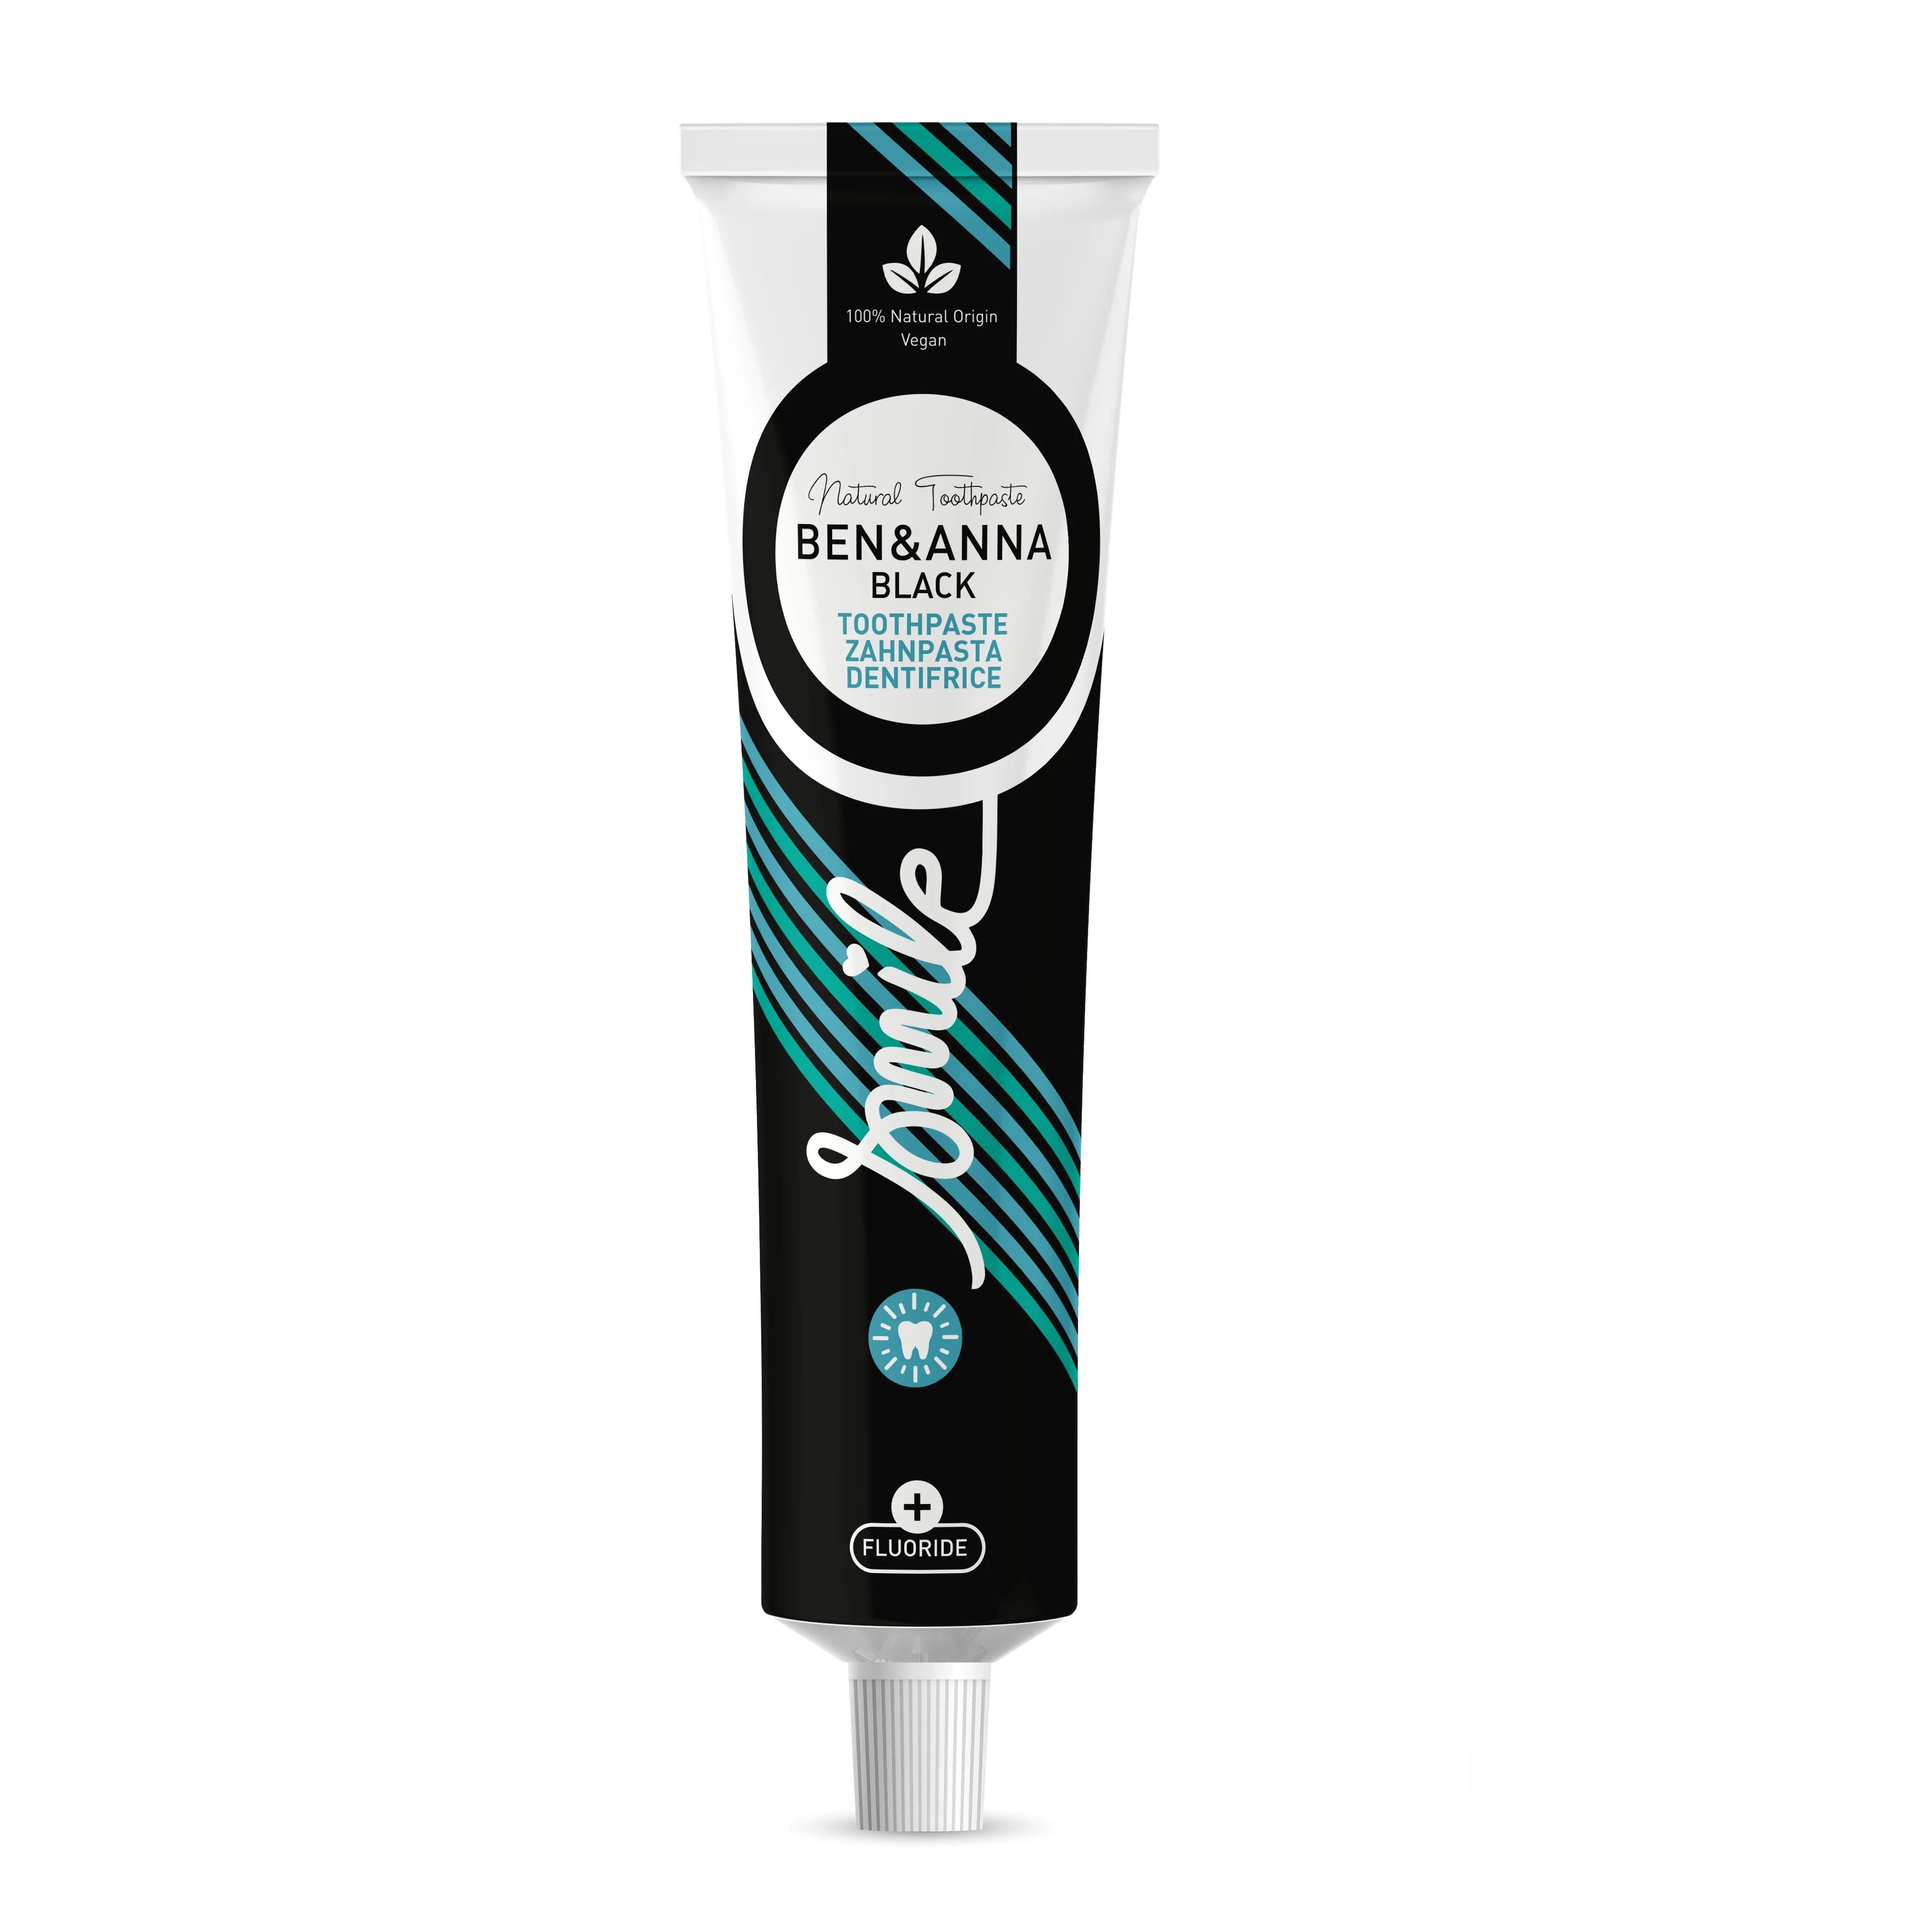 Toothpaste tube - Black with fluoride